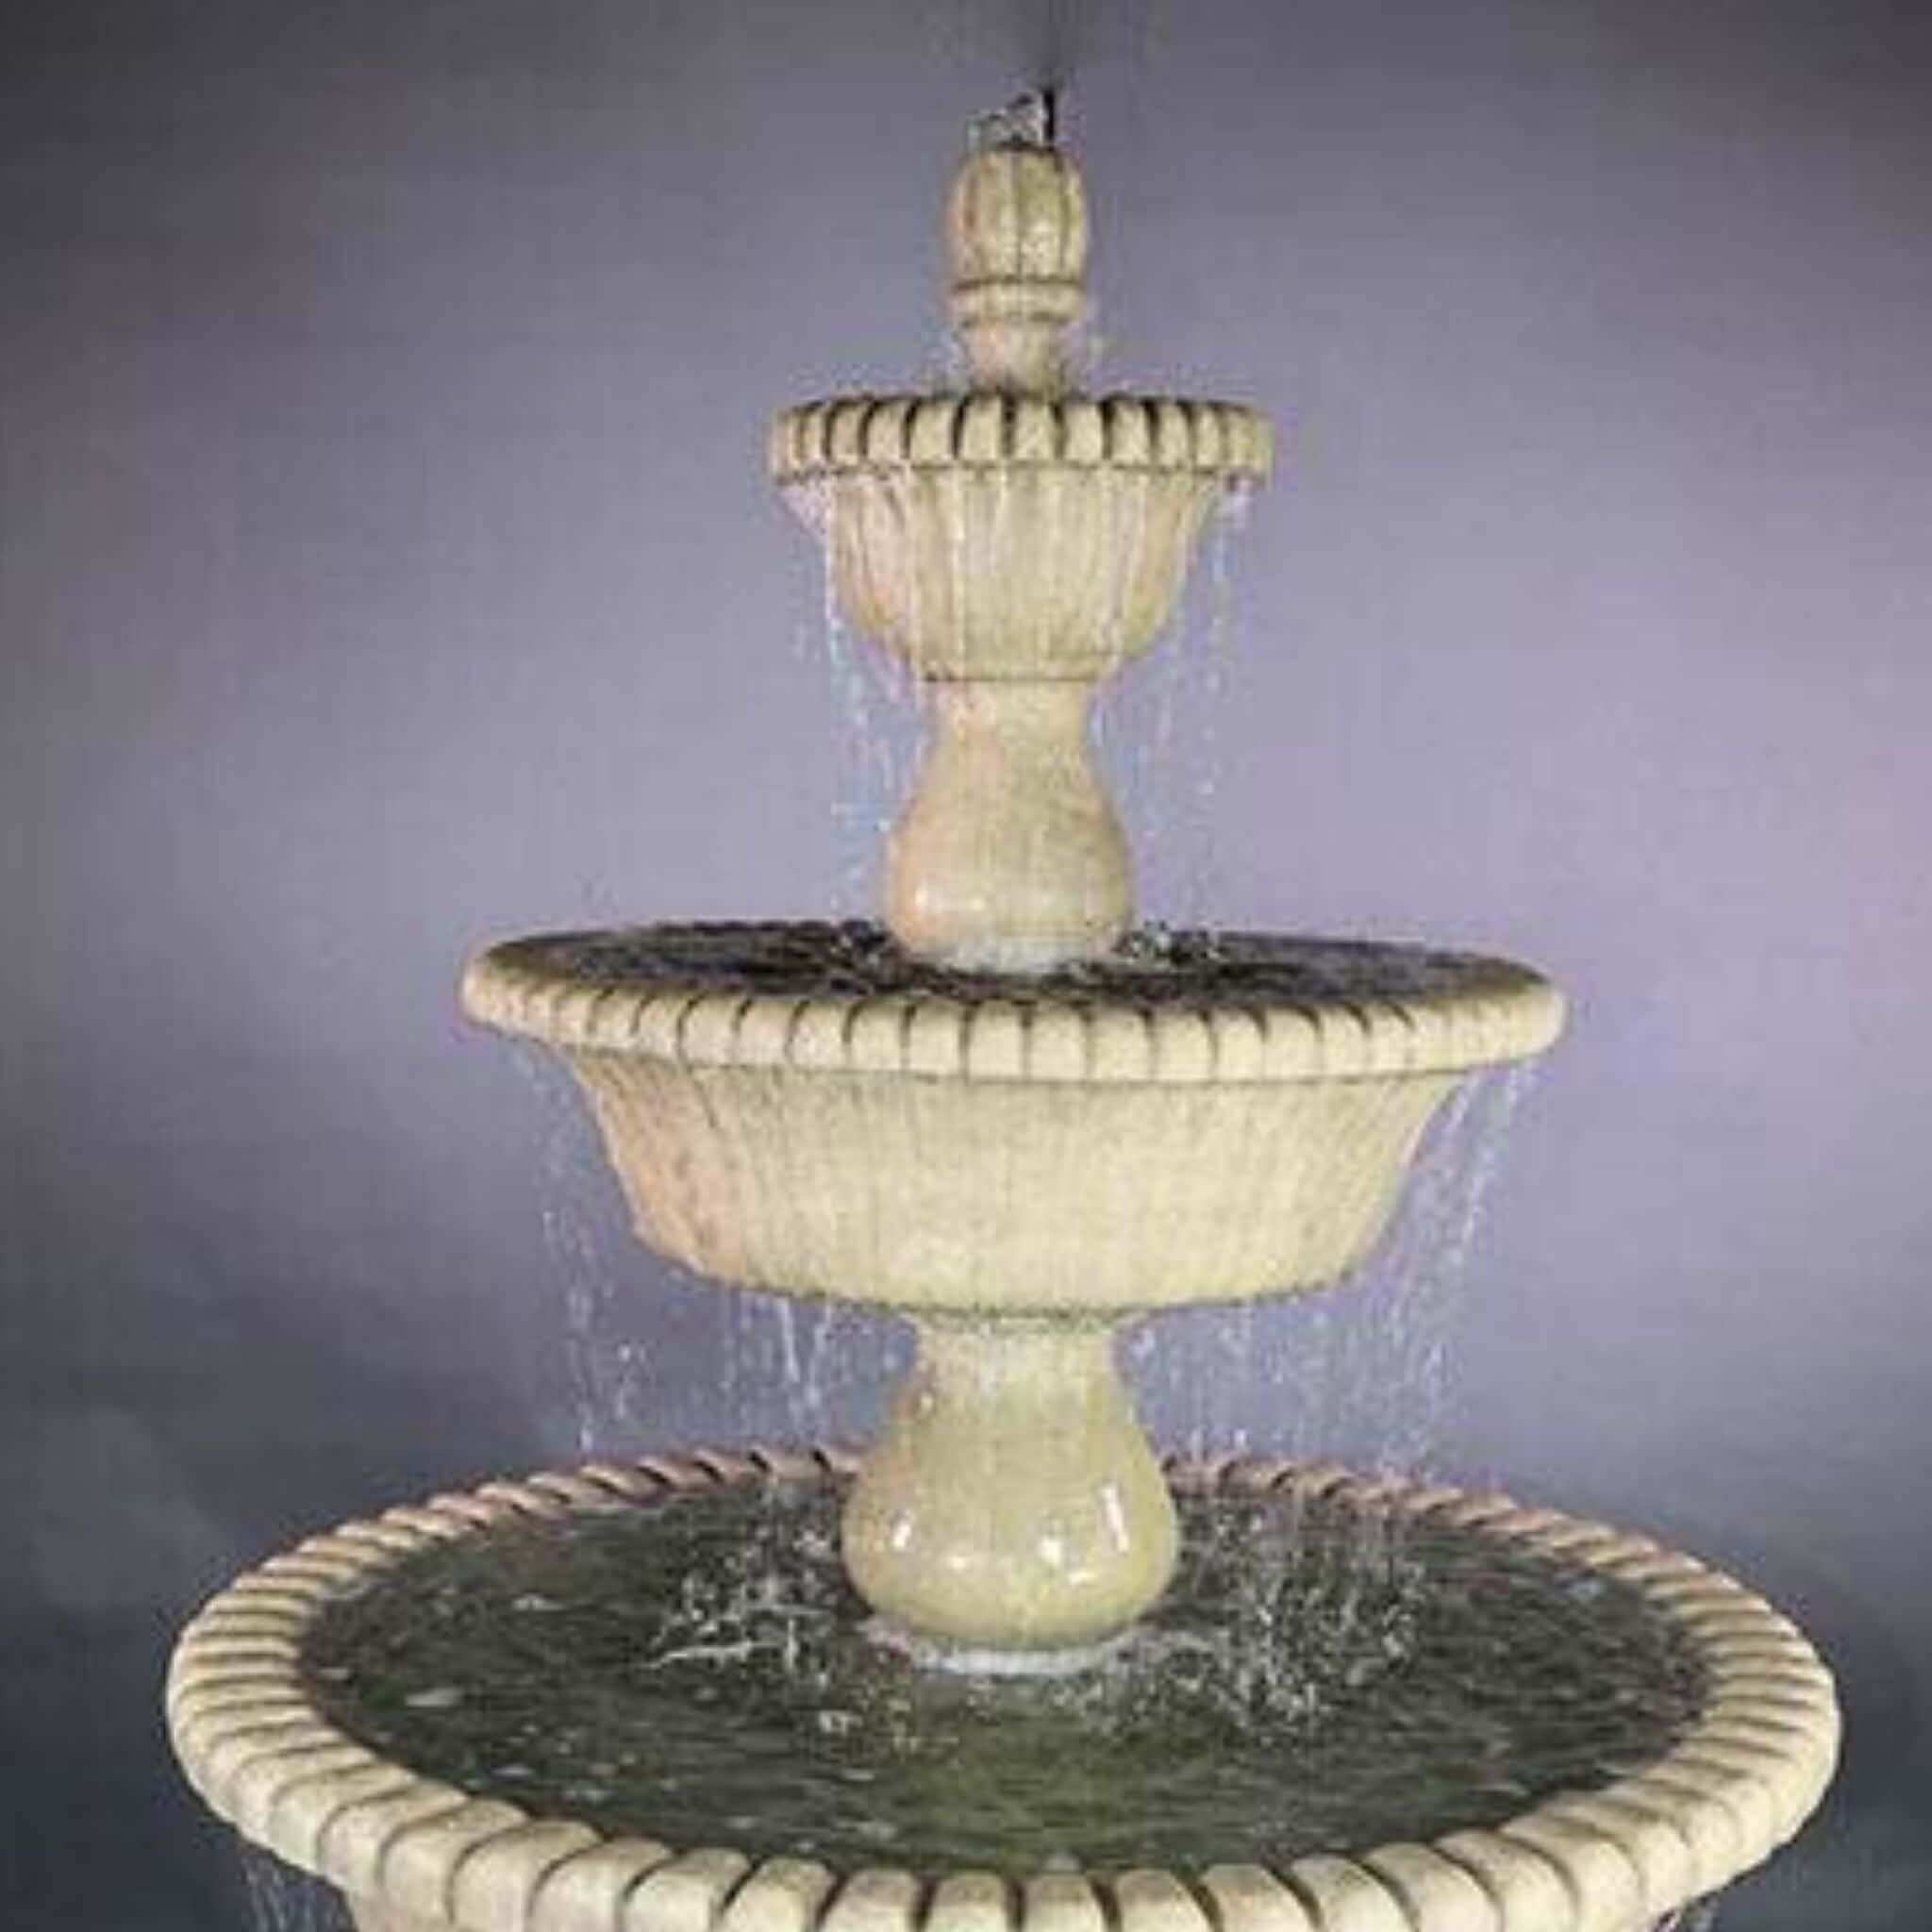 Malibu 3-Tier Concrete Pond Fountain - Giannini #1801